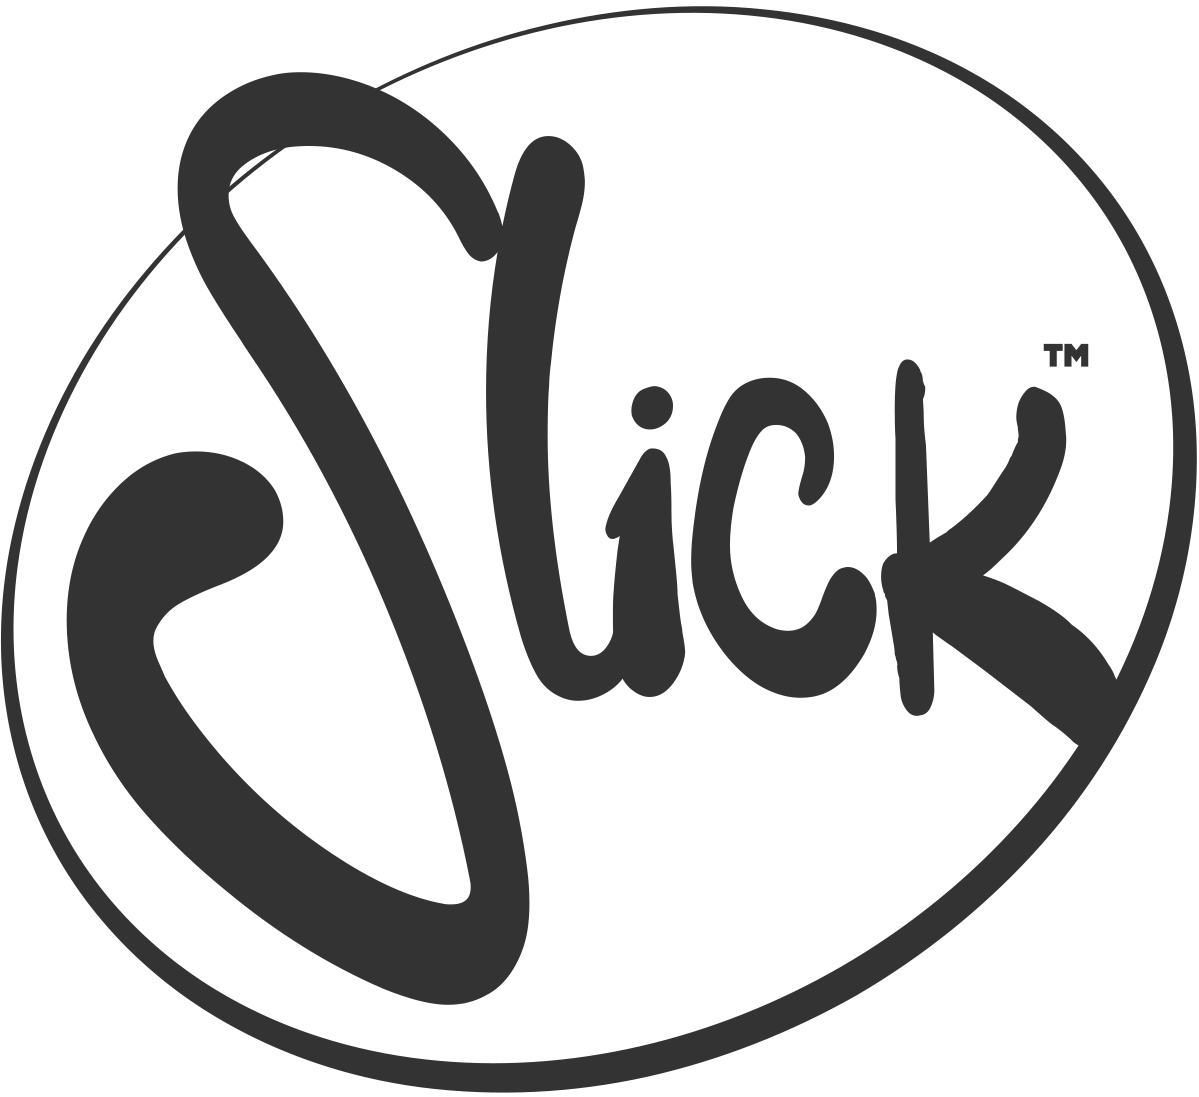 Slick - Caramel Flavouring (30ml)